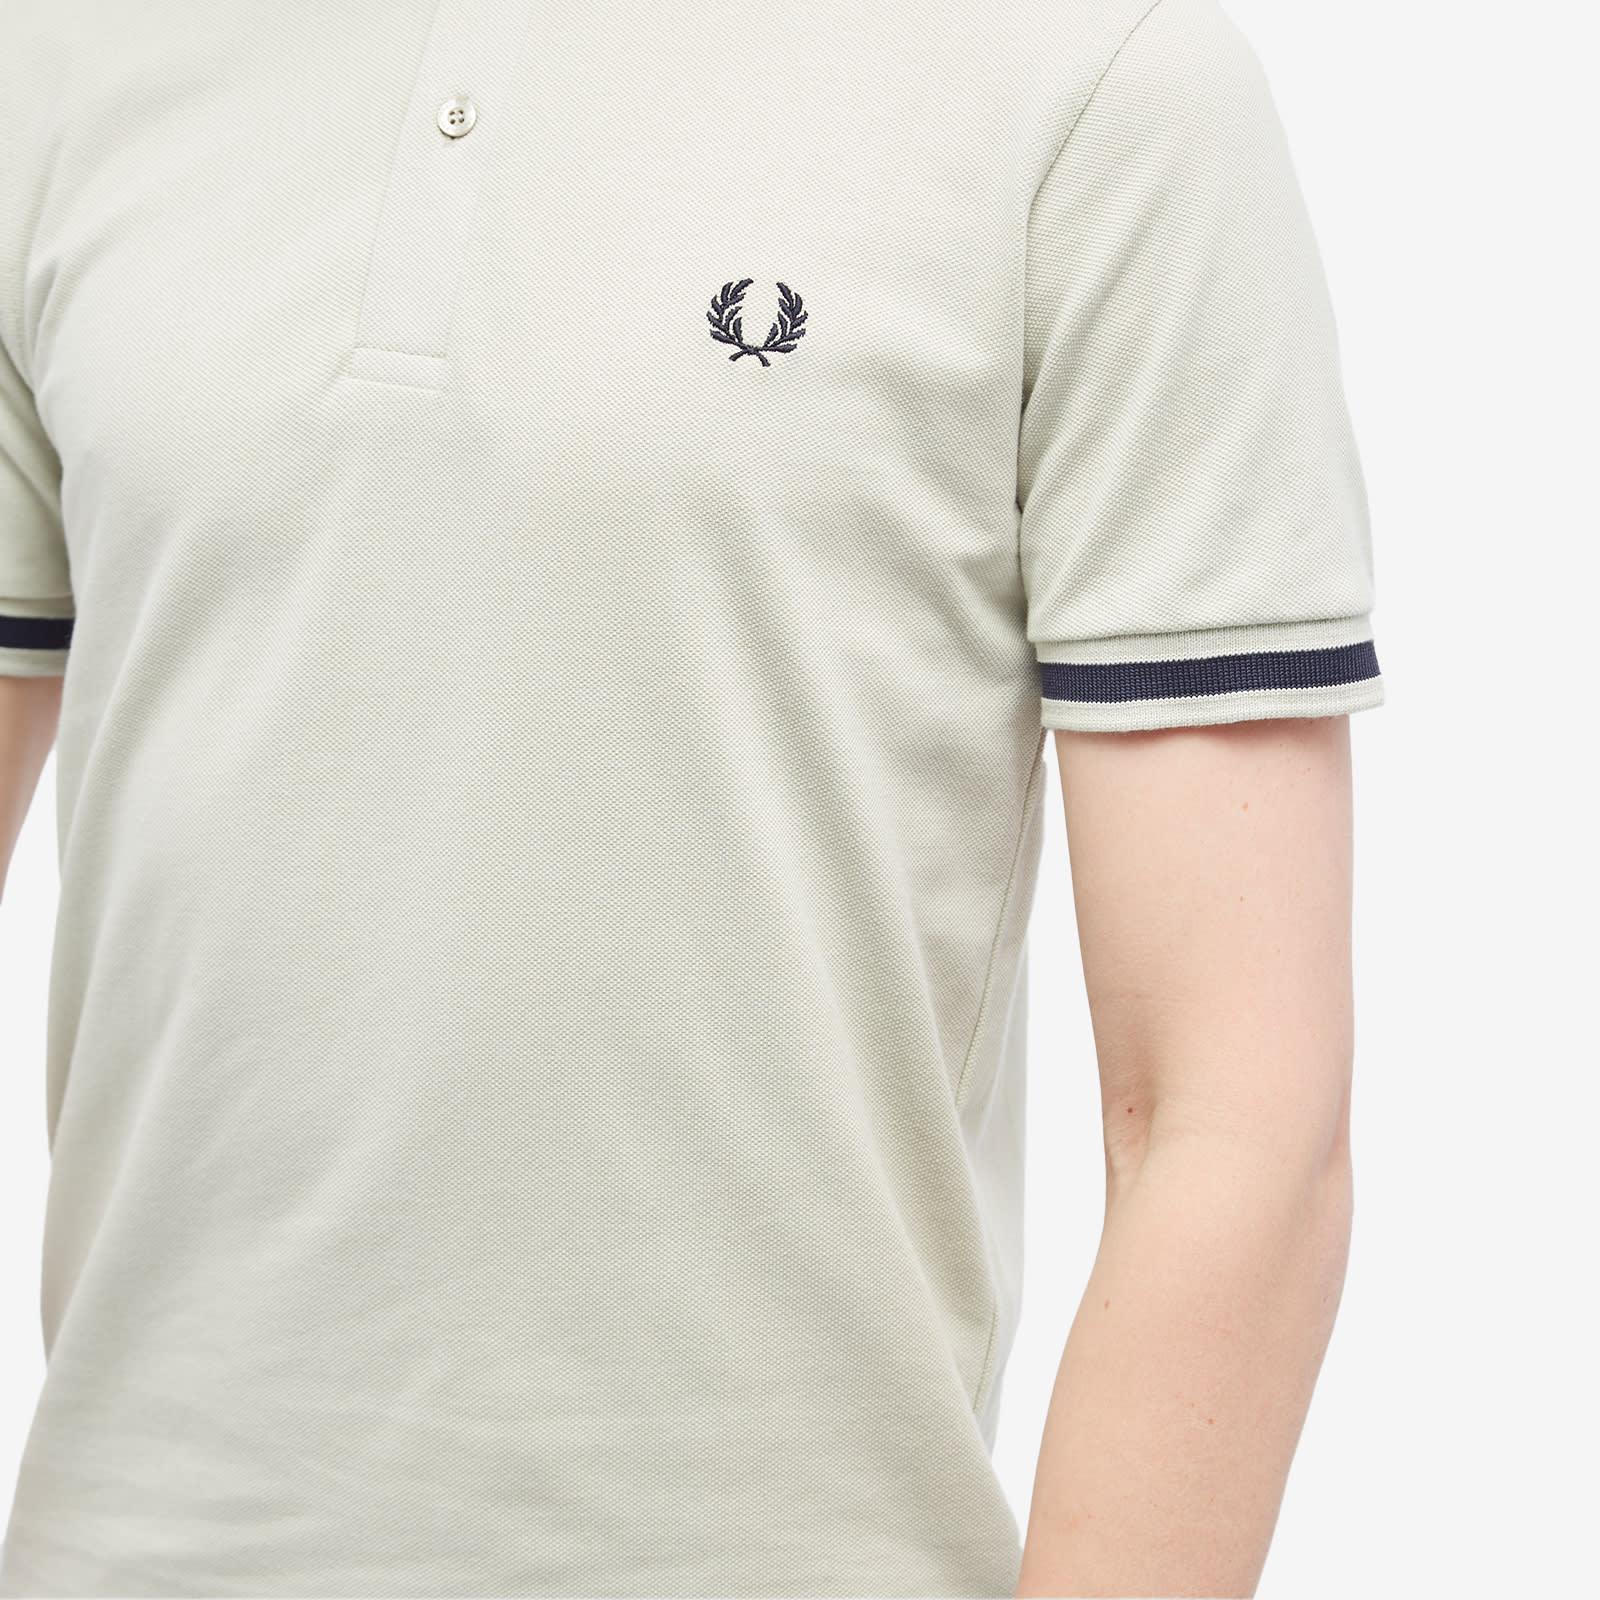 Unisex Single Tipped Polo Shirt